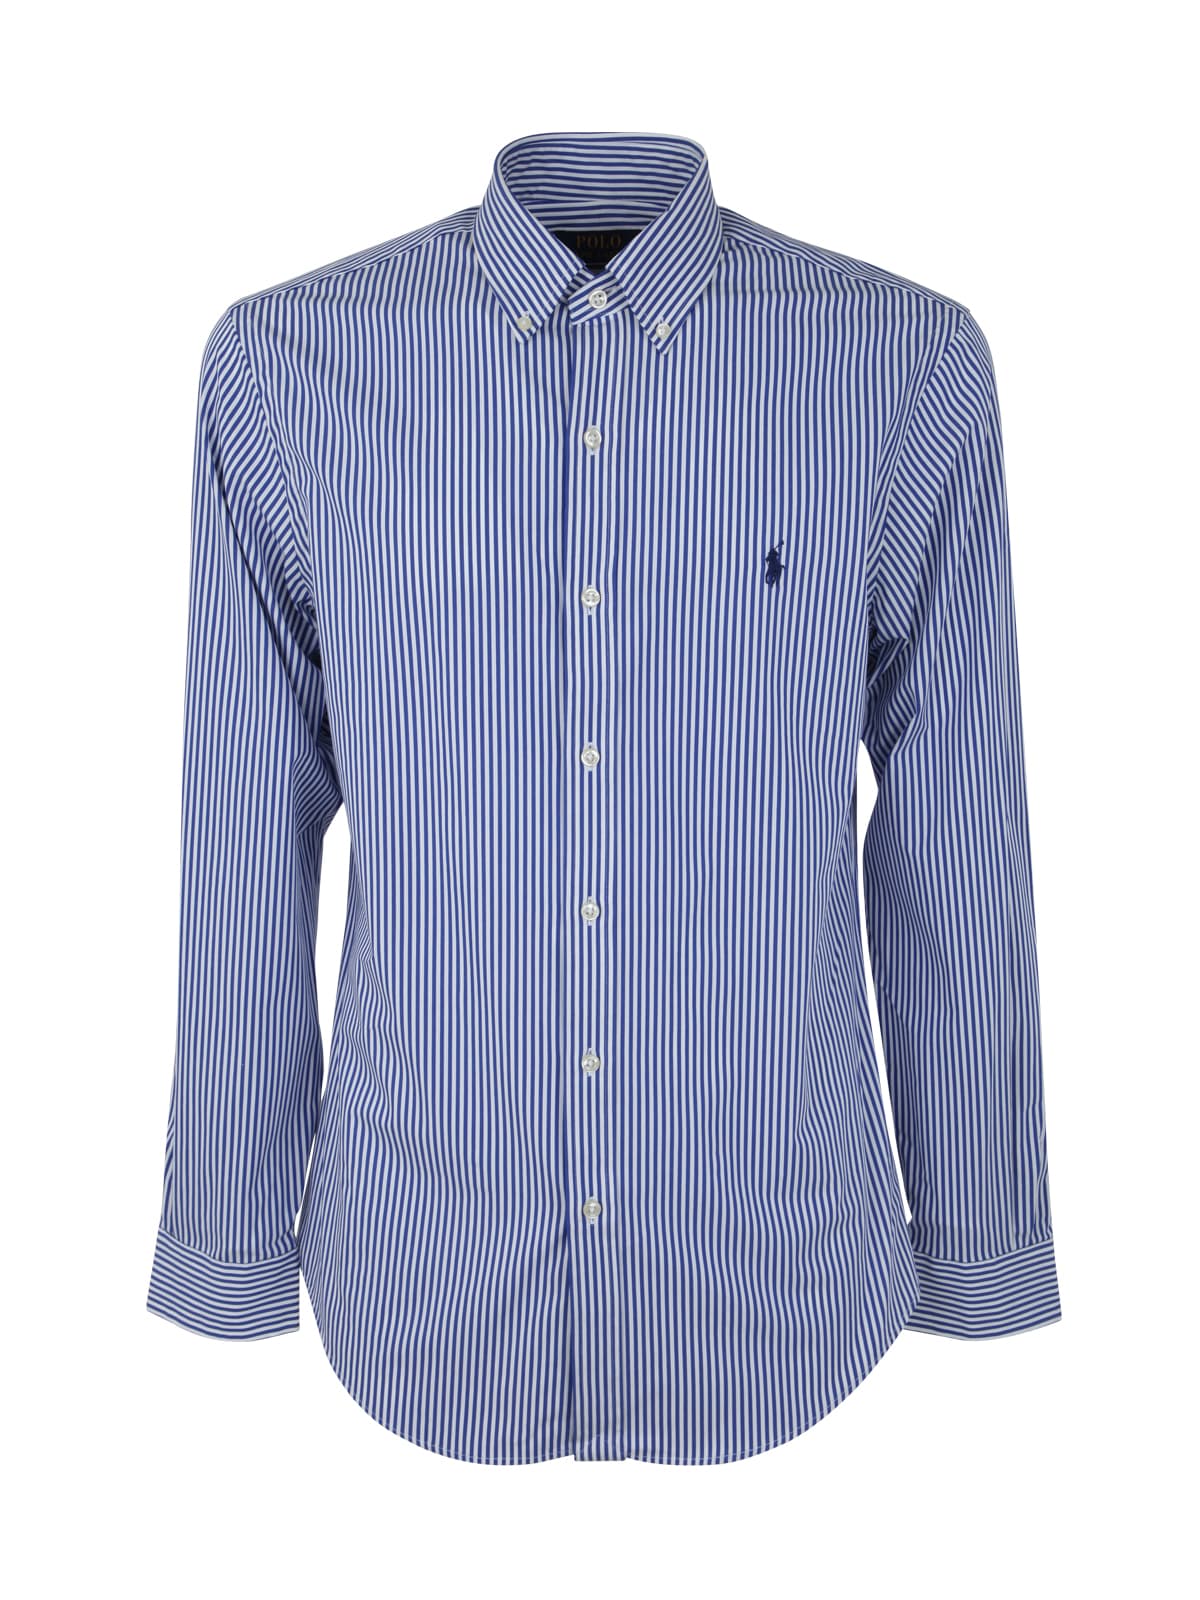 Polo Ralph Lauren Slbdppcs Long Sleeve Sport Shirt In Blue White Bengal Stripe